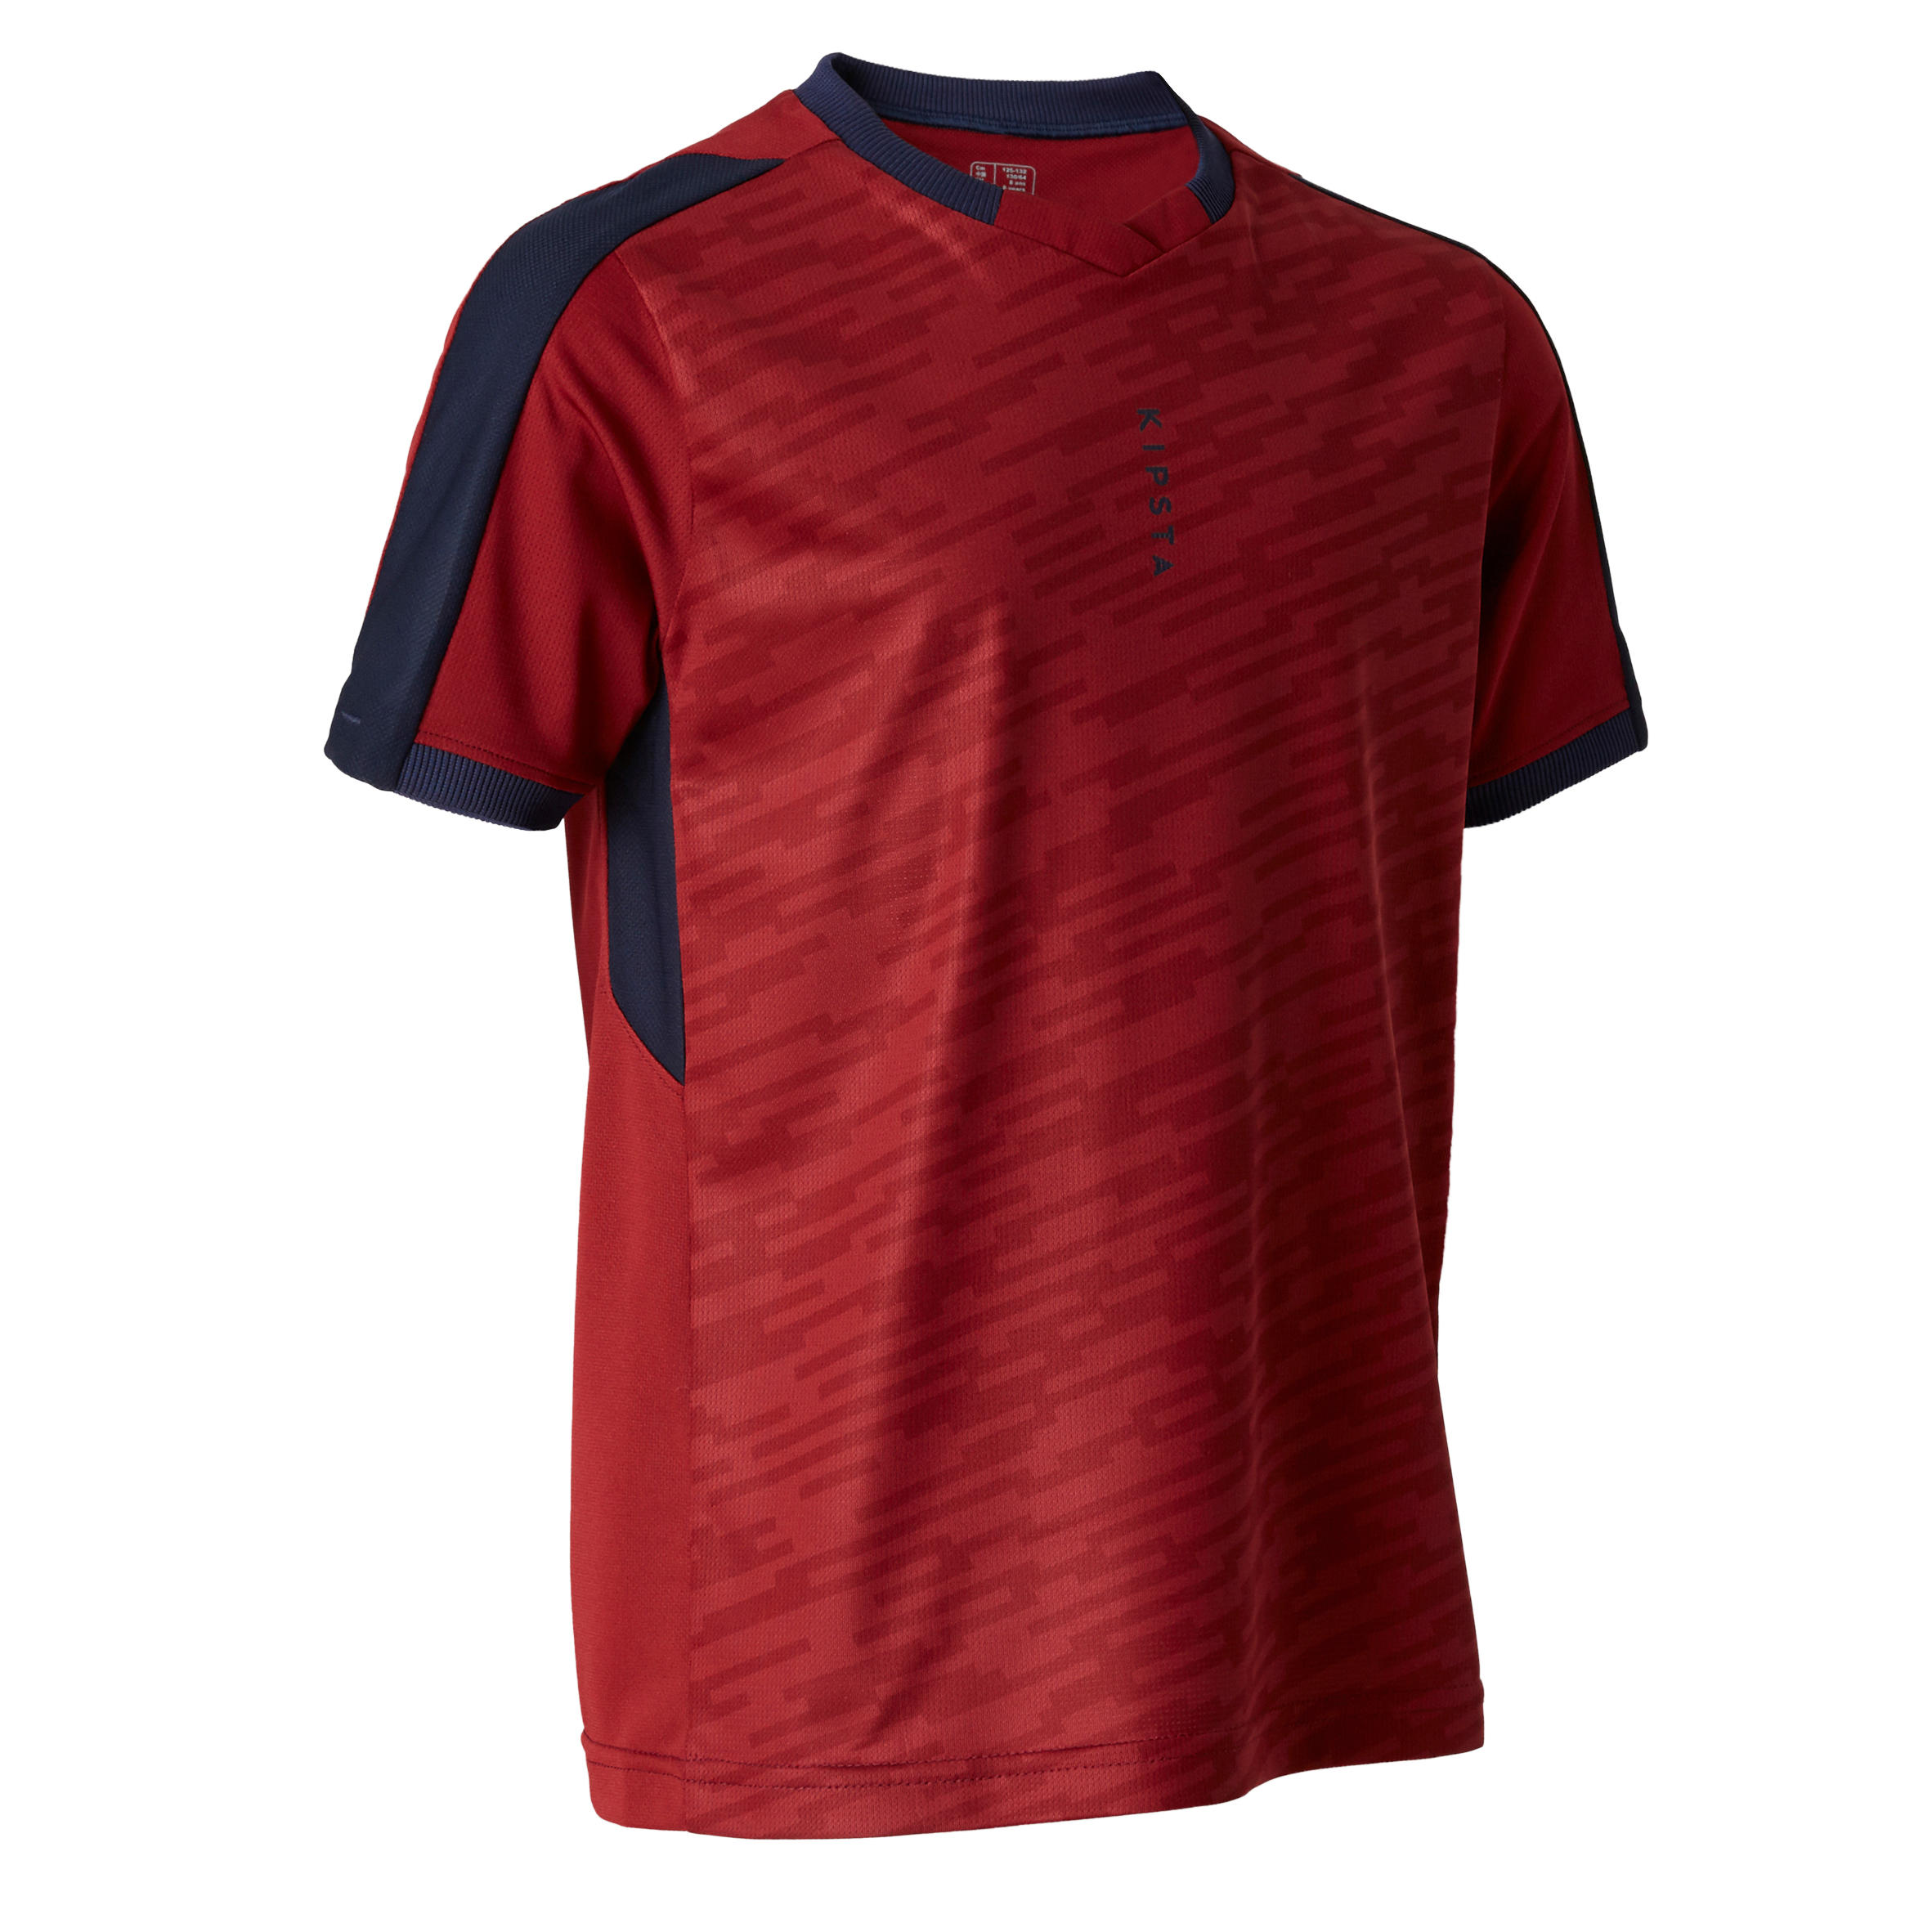 KIPSTA Kids' Short-Sleeved Football Shirt F520 - Burgundy/Navy